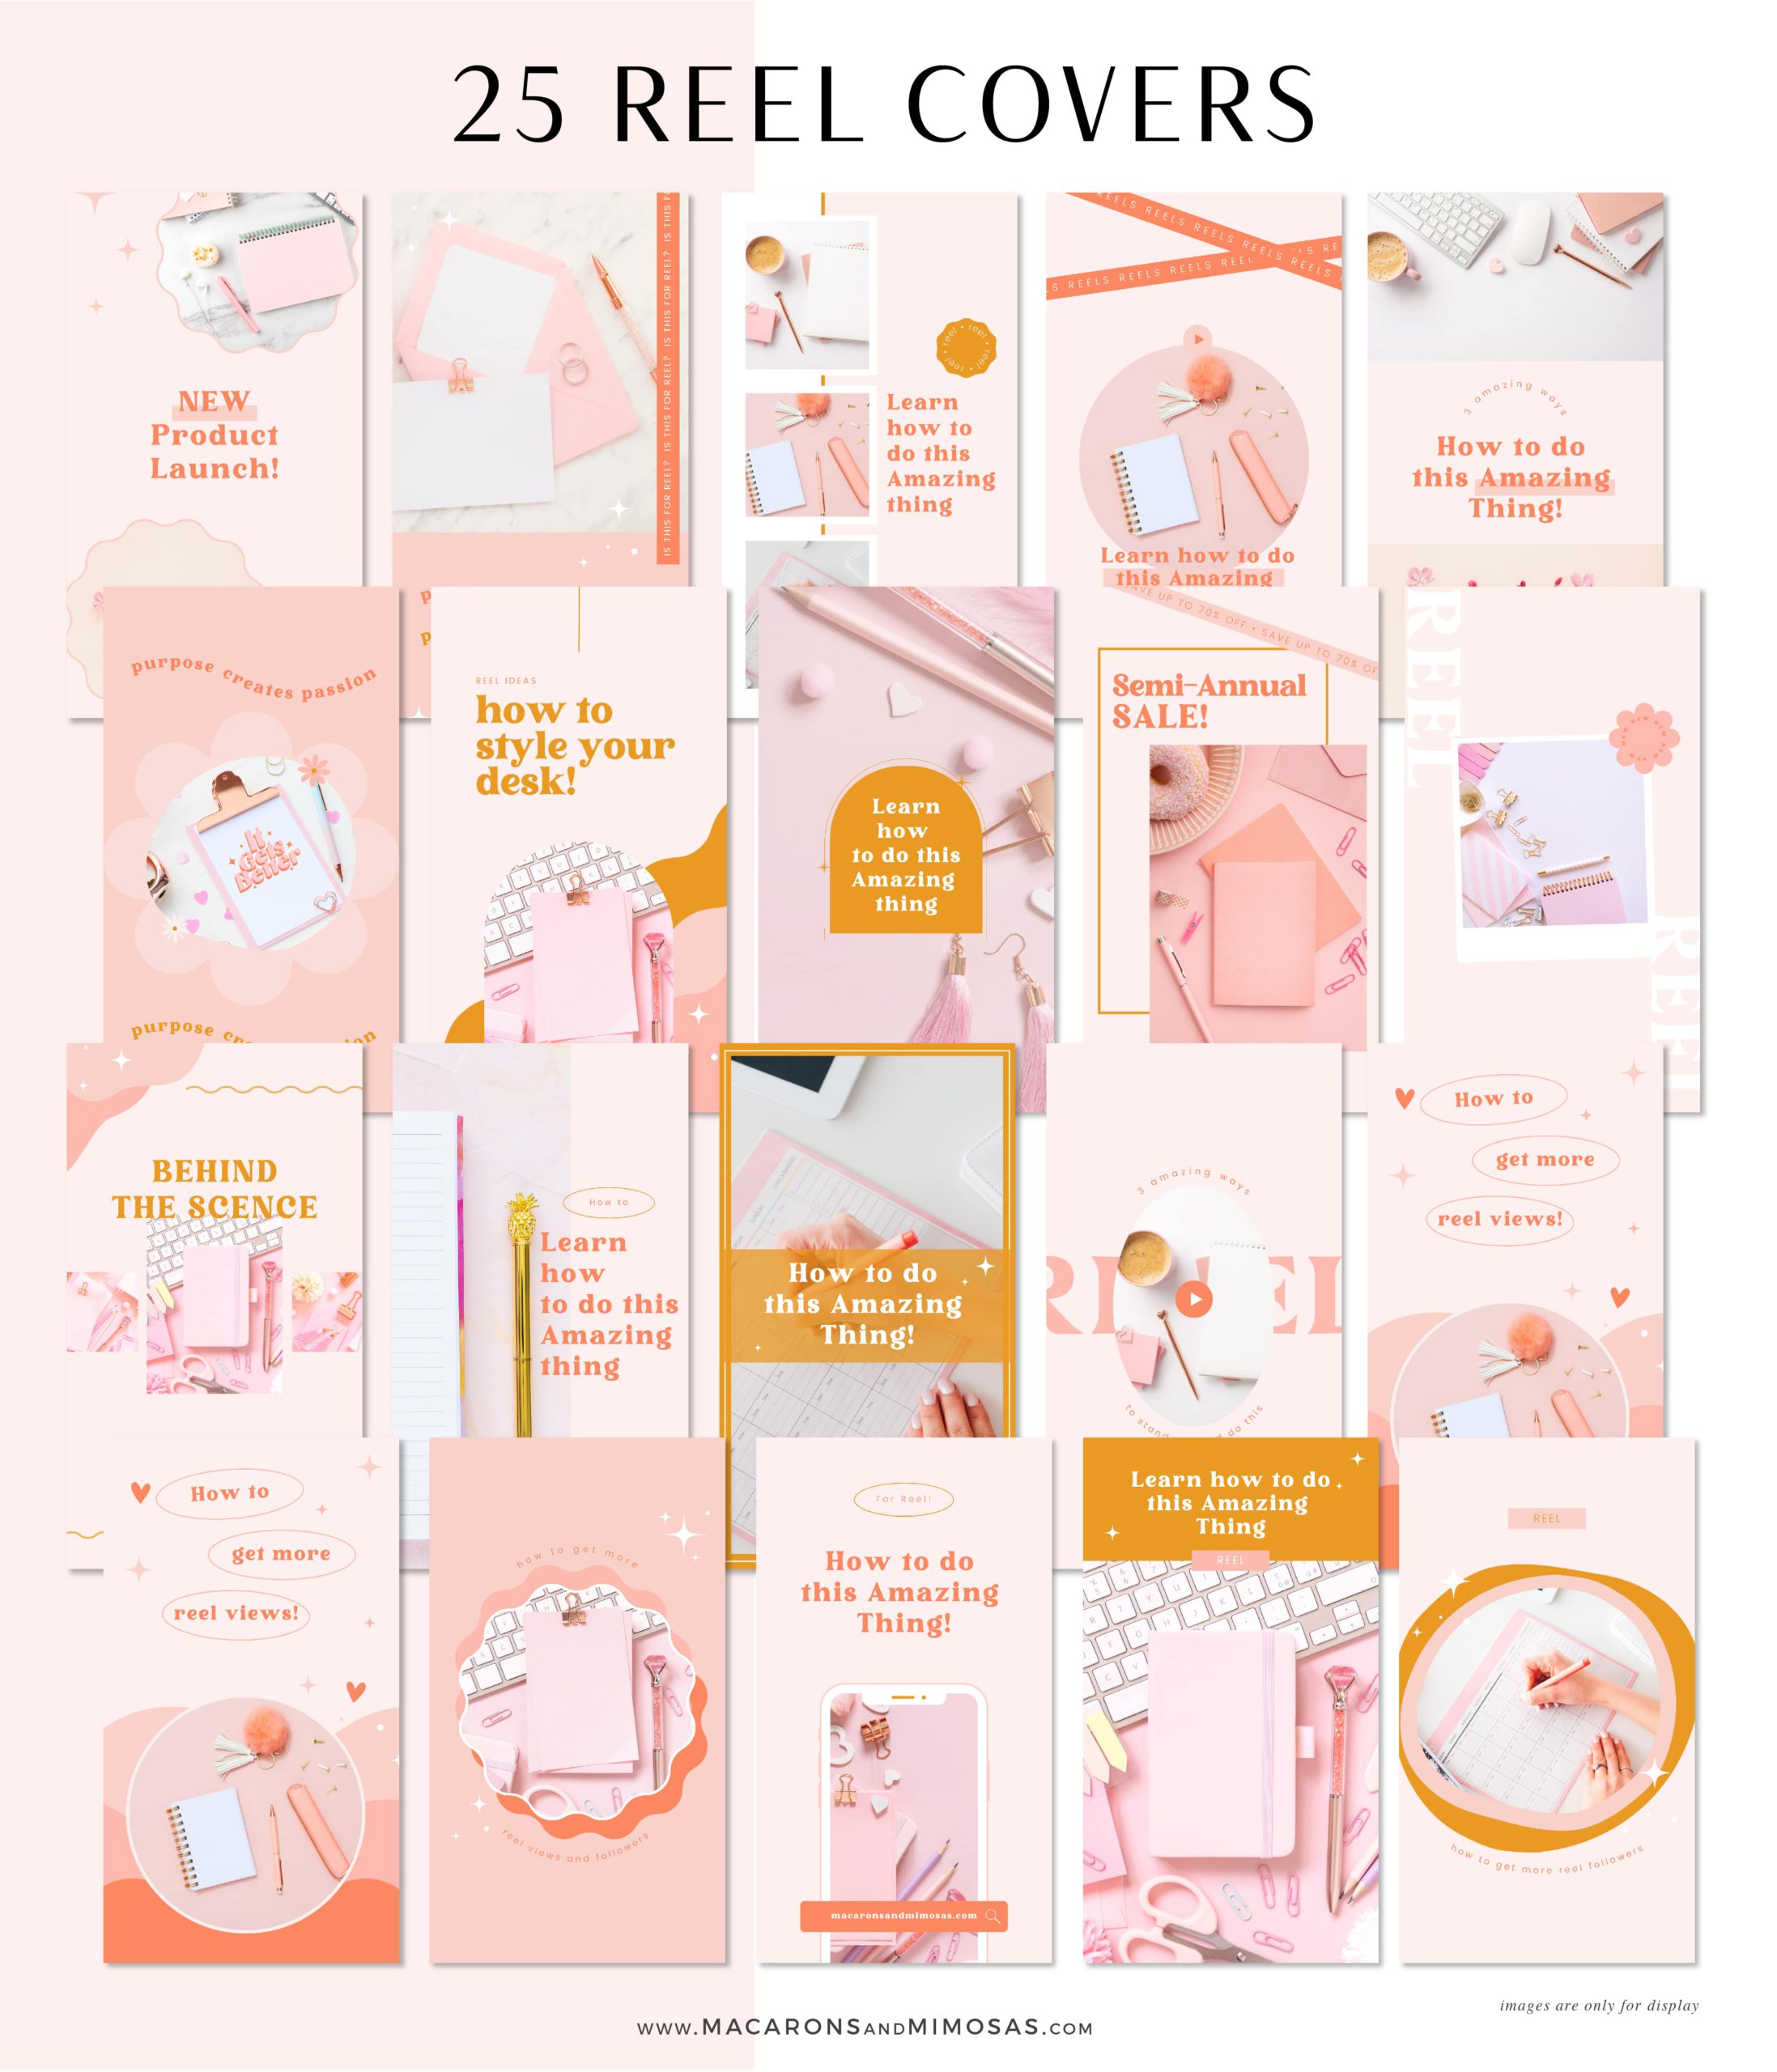 Instagram Reels Pink Boho, Content Creator Reel Covers Editable in Canva, Instagram Stories, TikTok and Pinterest, Bright Boho Social Media Bundle